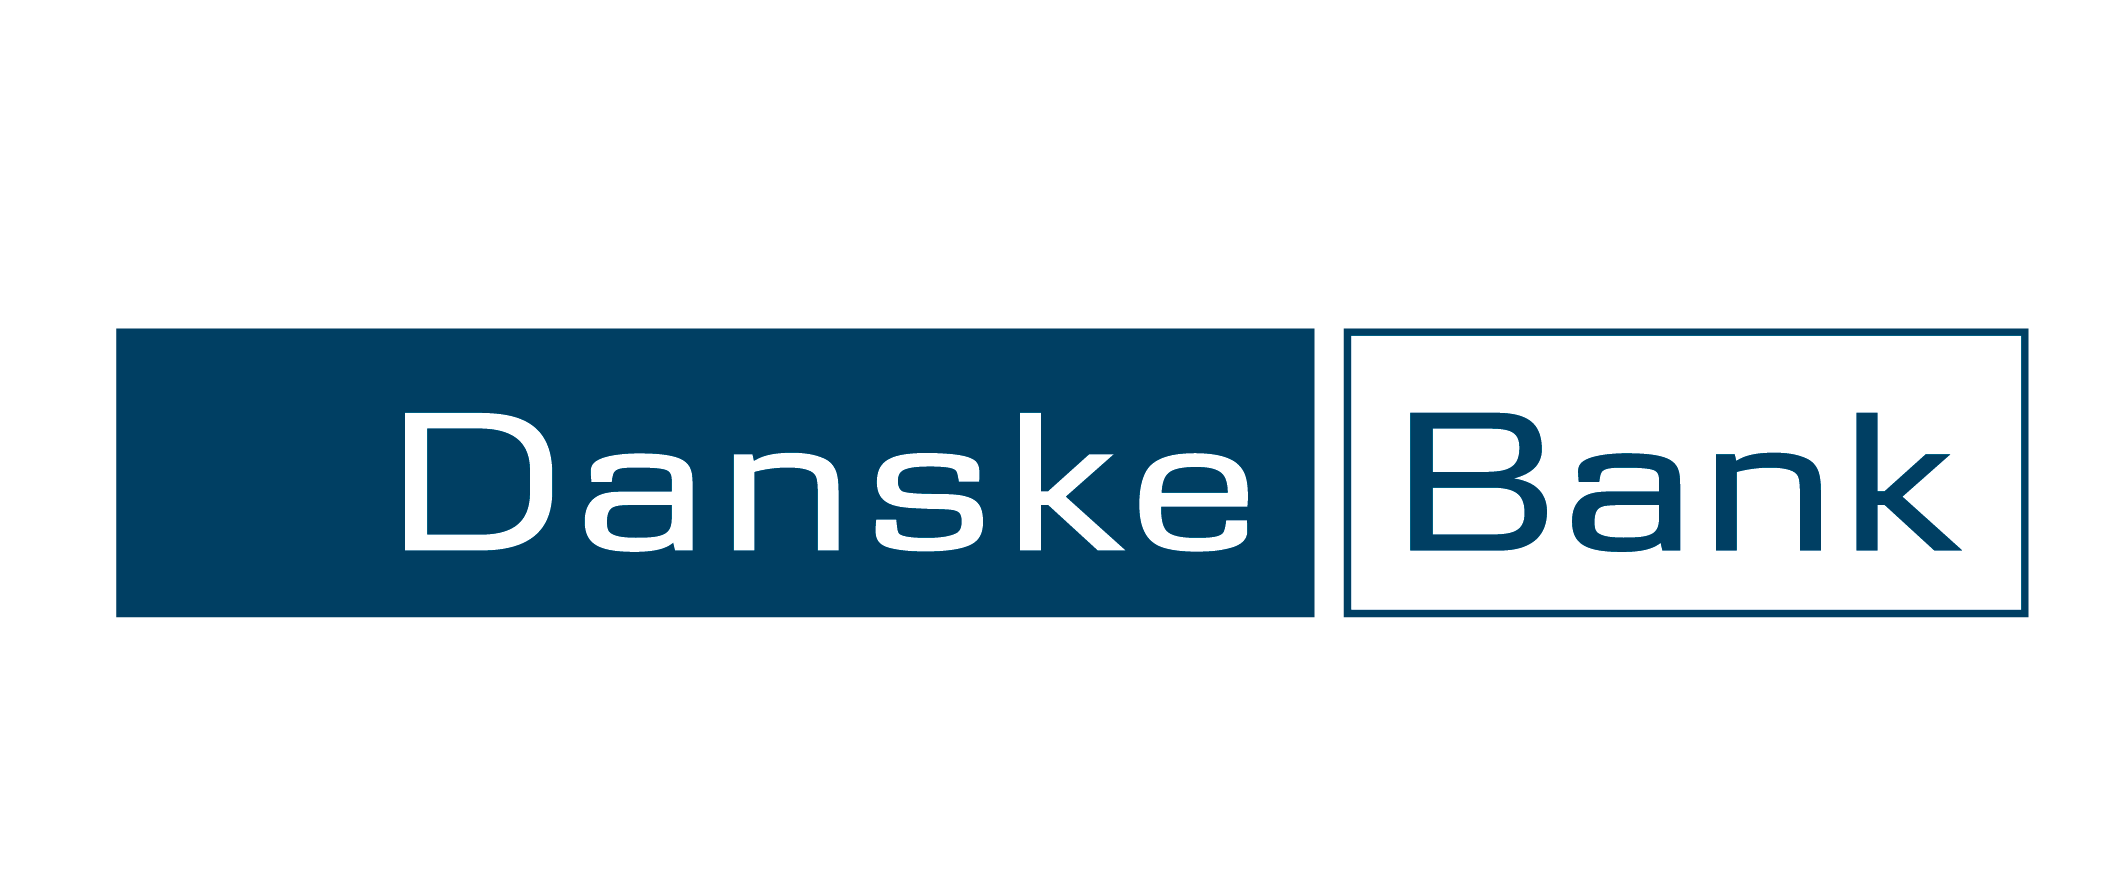 Danske Bank Brand Logo